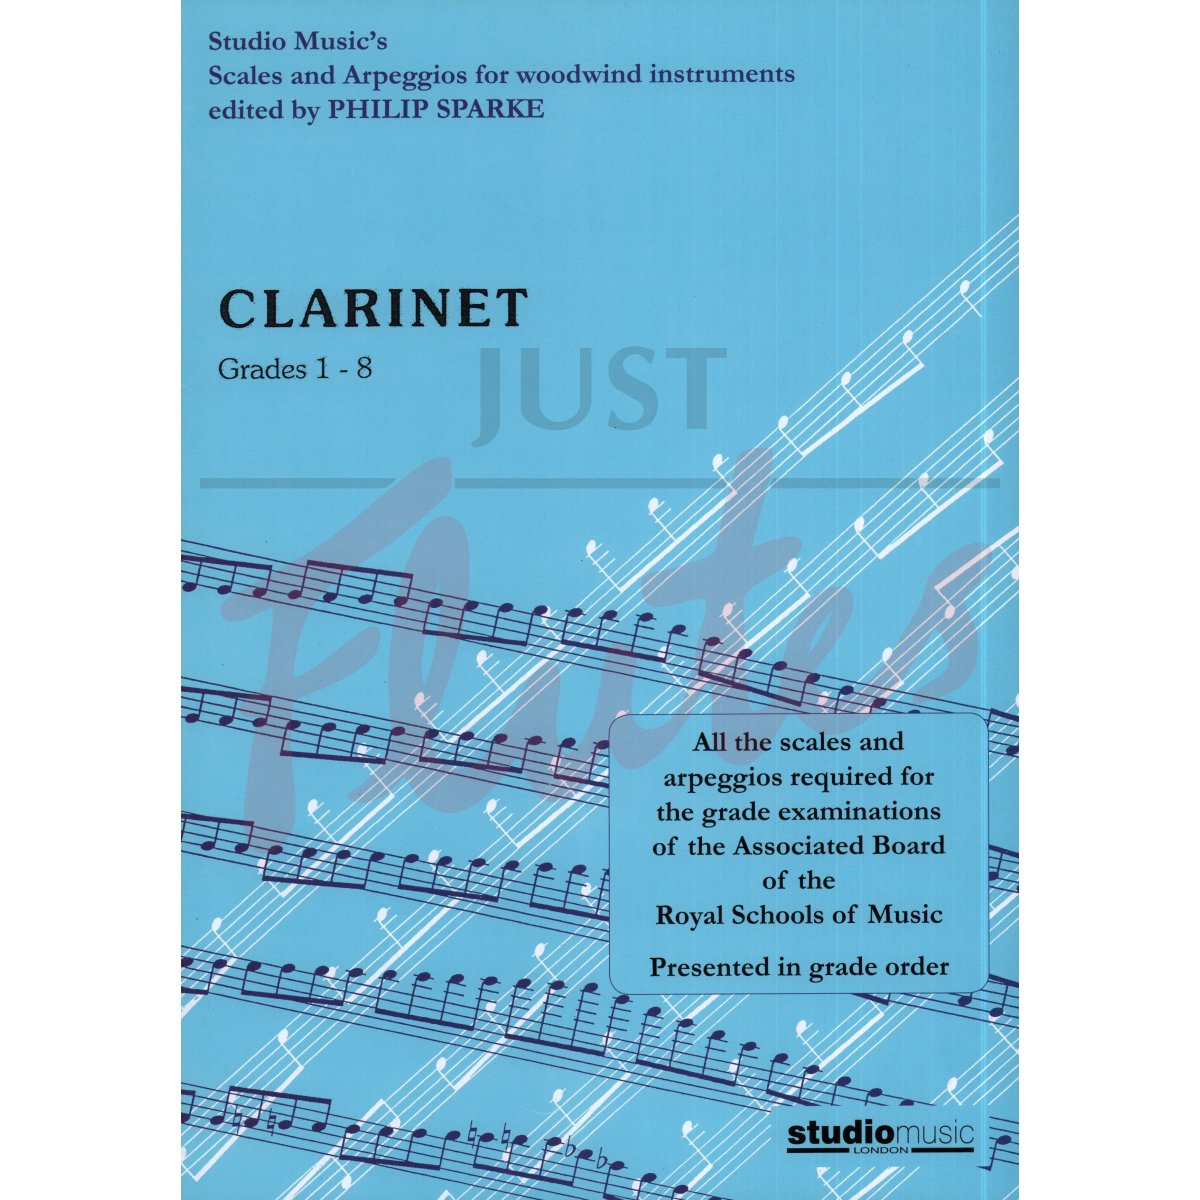 Scales and Arpeggios Grades 1-8 [Clarinet]